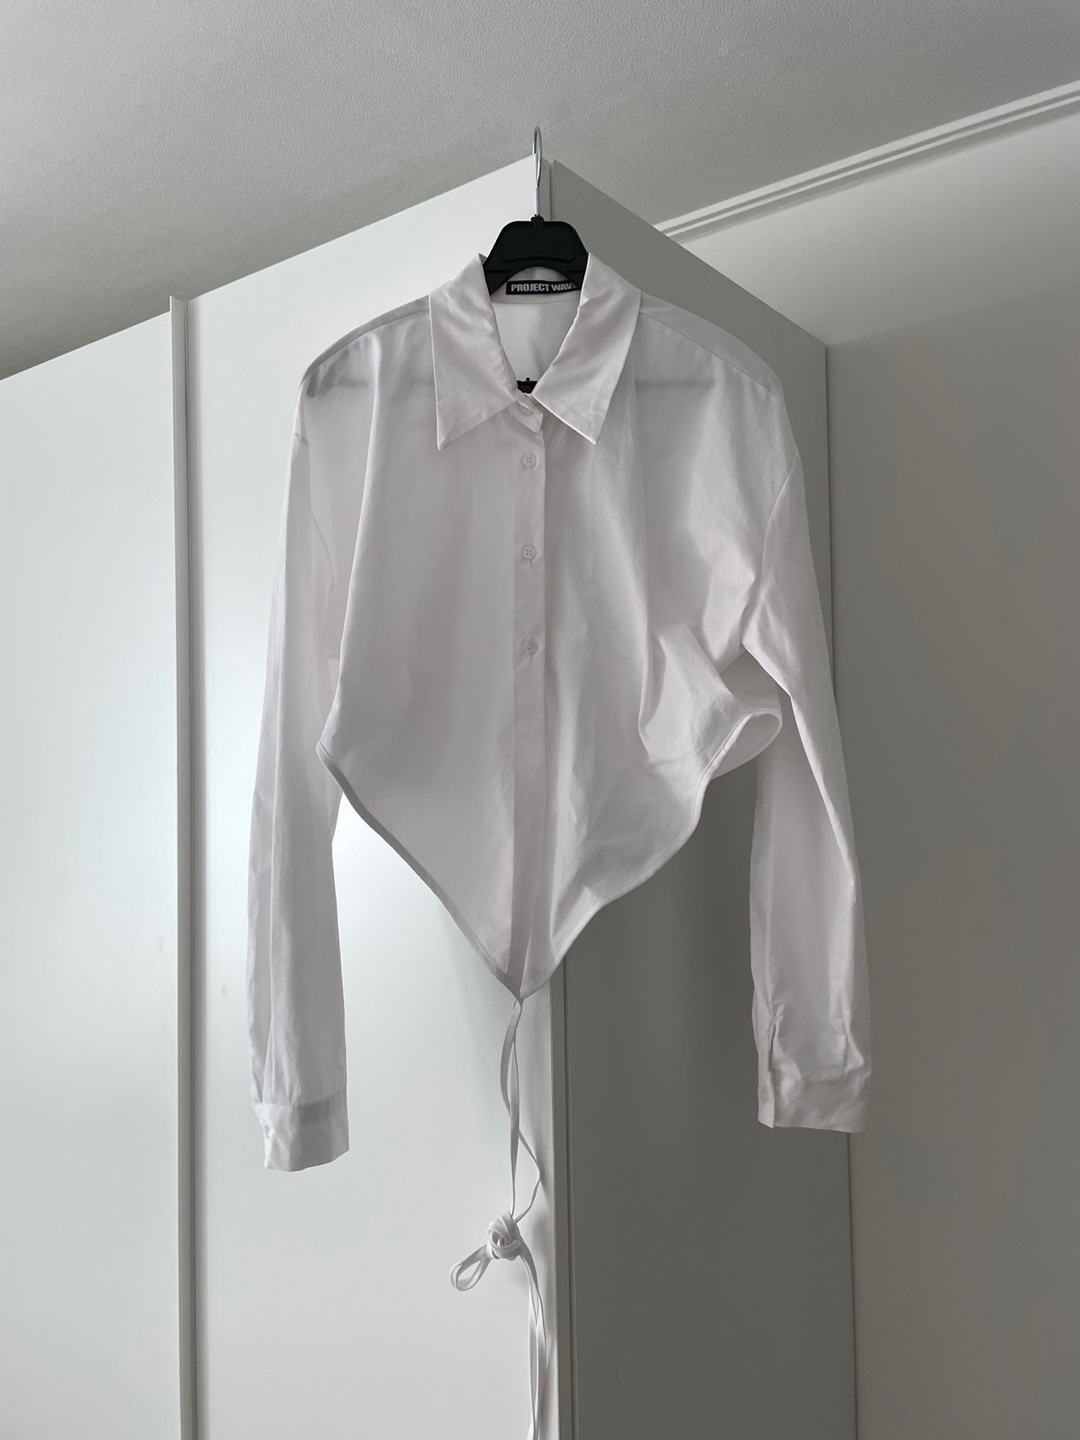 select) Strap Long Sleeve Wrap Shirt Top (White/Black/Red)